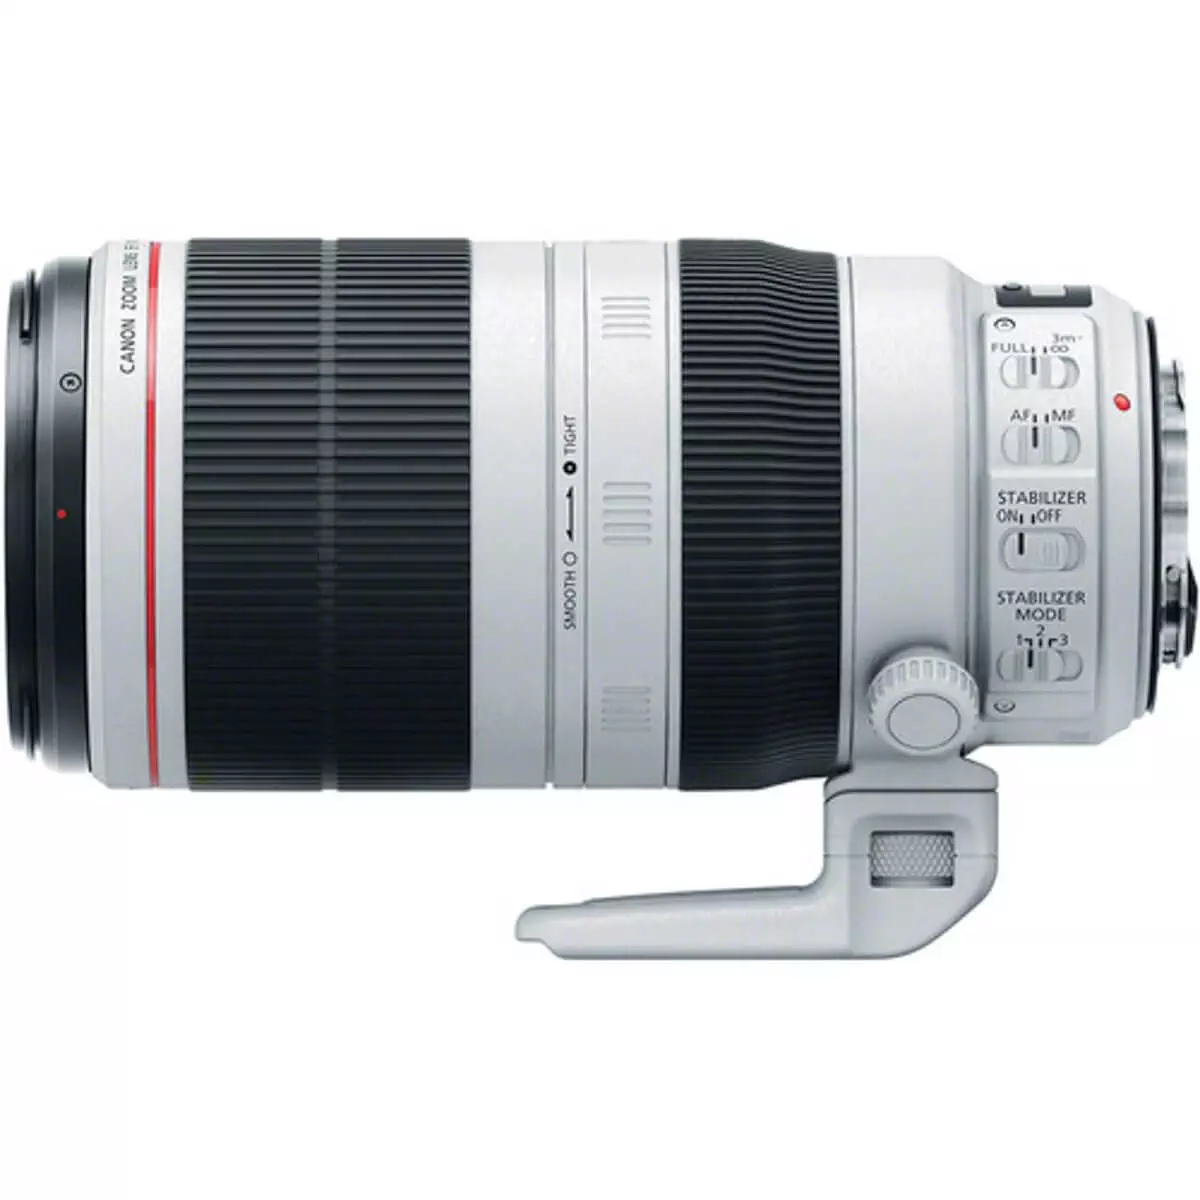 Canon EF 100-400mm f4.5-5.6L IS II USM Lens 2